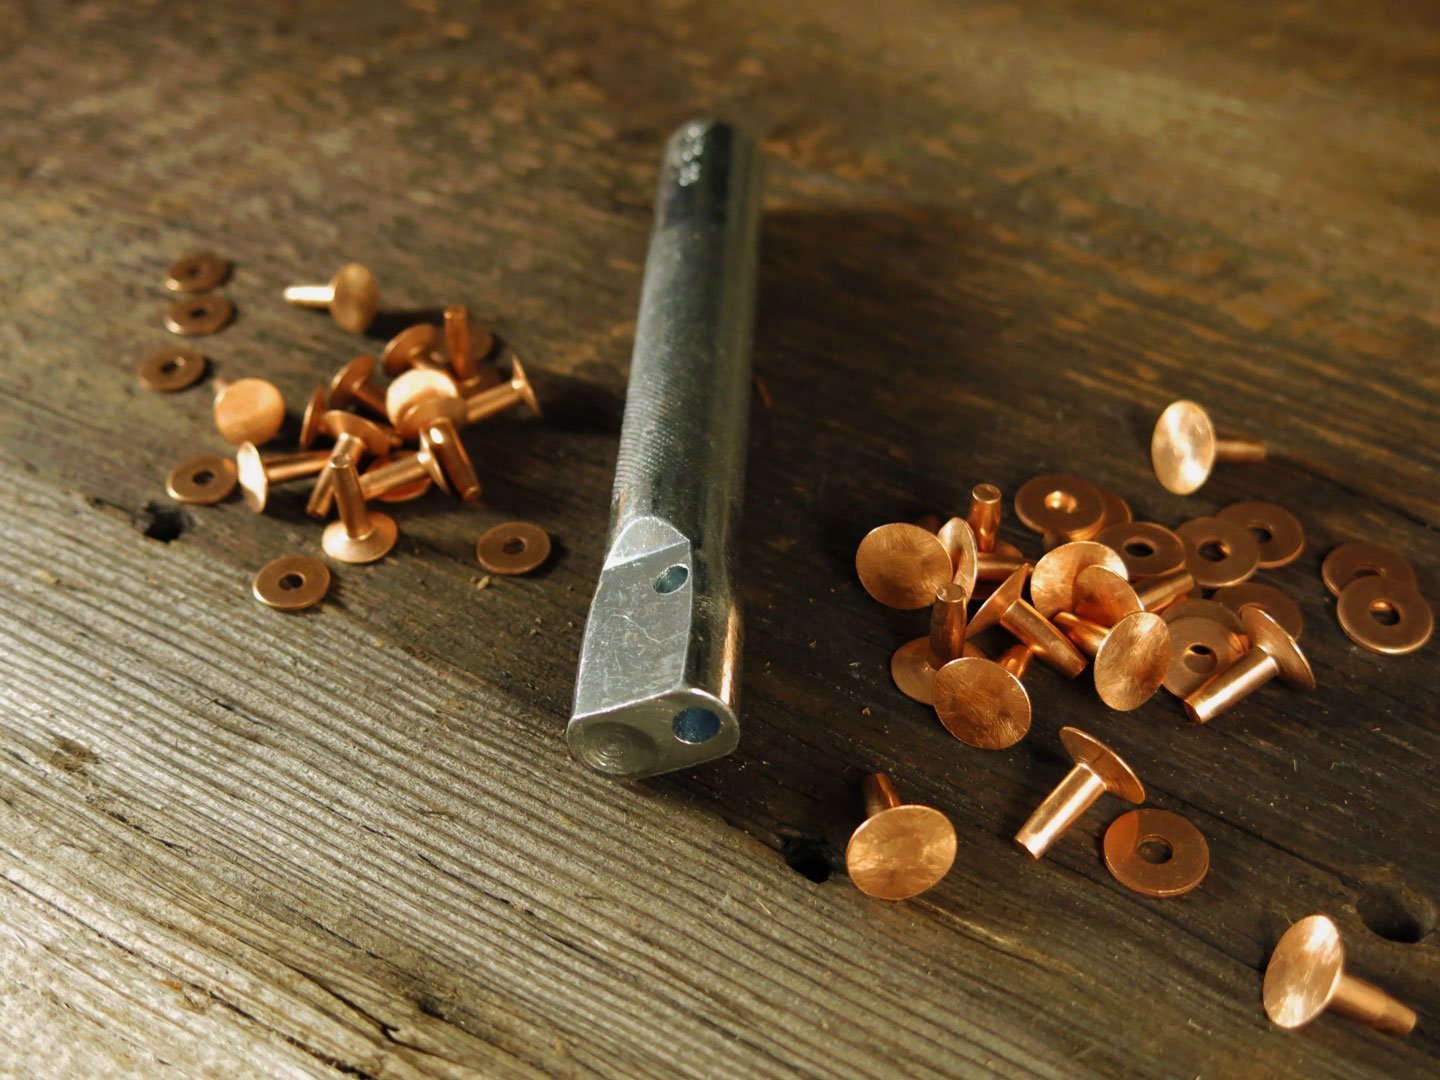 Copper Rivet Kit